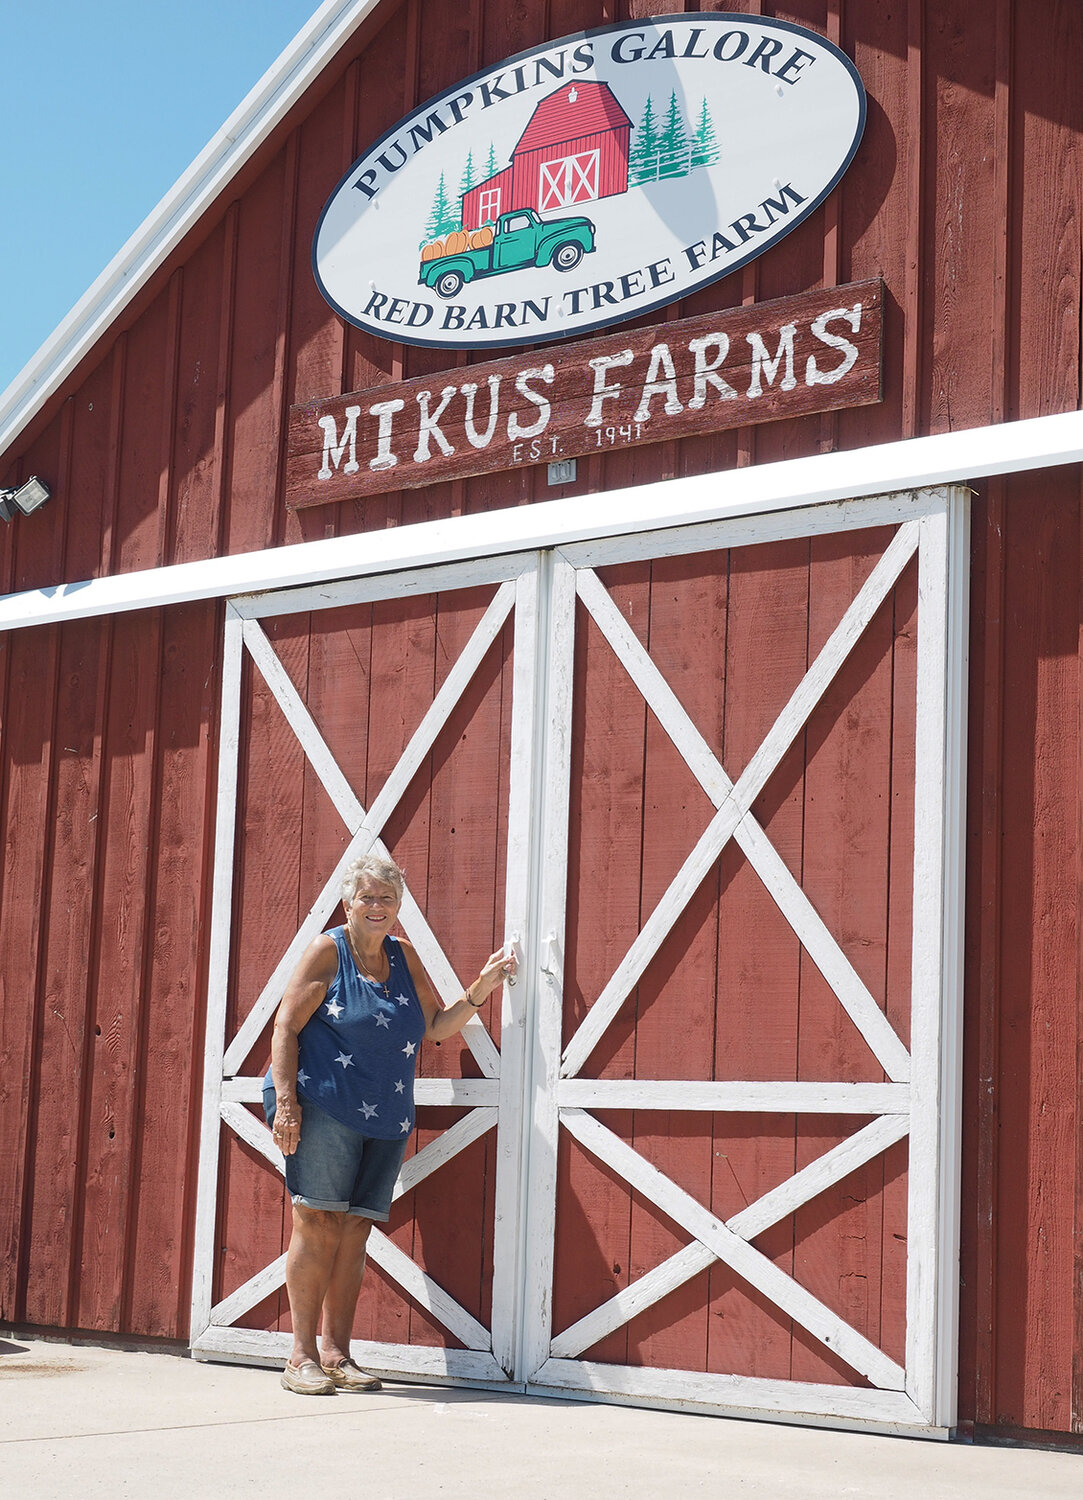 Ardell Mikus poses outside the Mikus Farms barn.